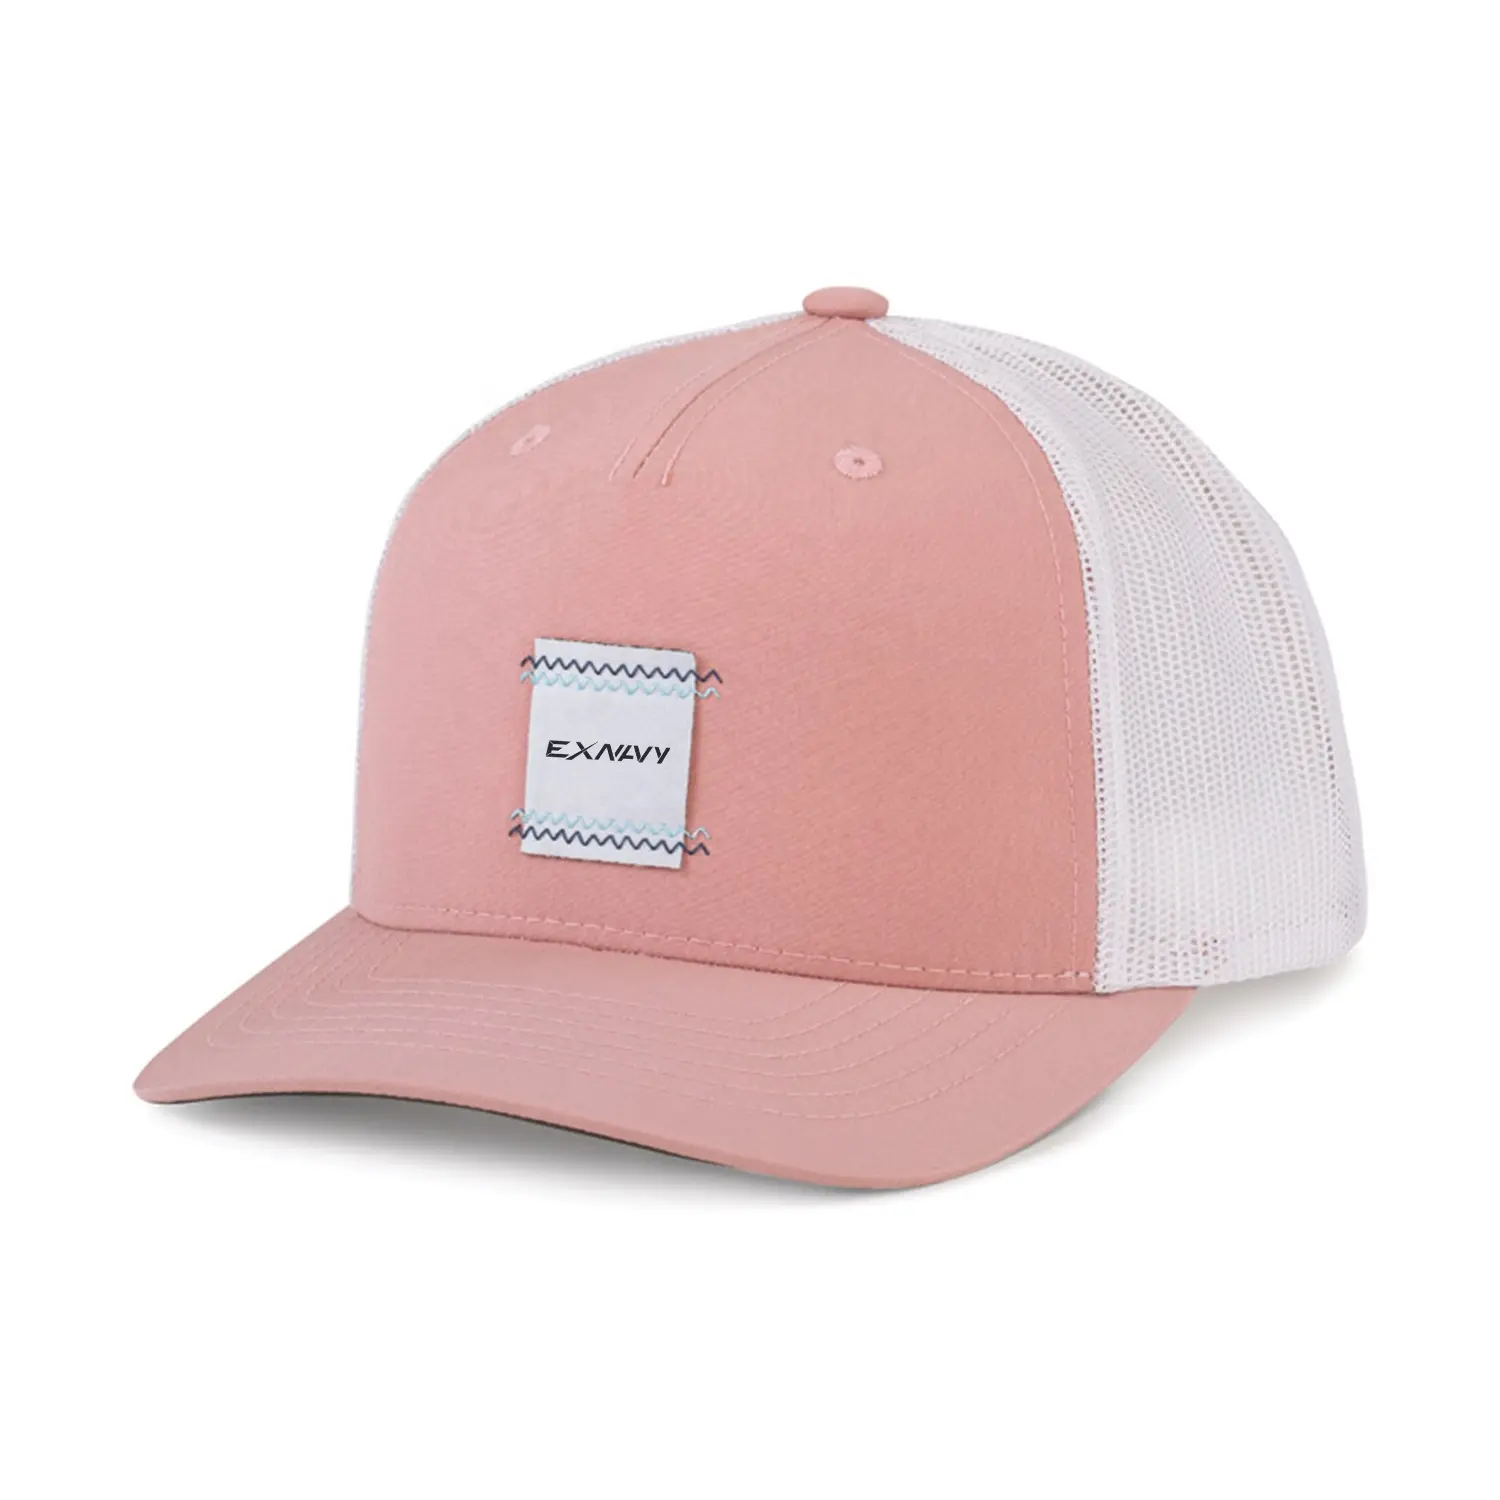 Comfort Best Quality Golf Cap Pink Quick Dry Performance Sport Nuevo estilo Flat Hat Gorra de béisbol Proveedores